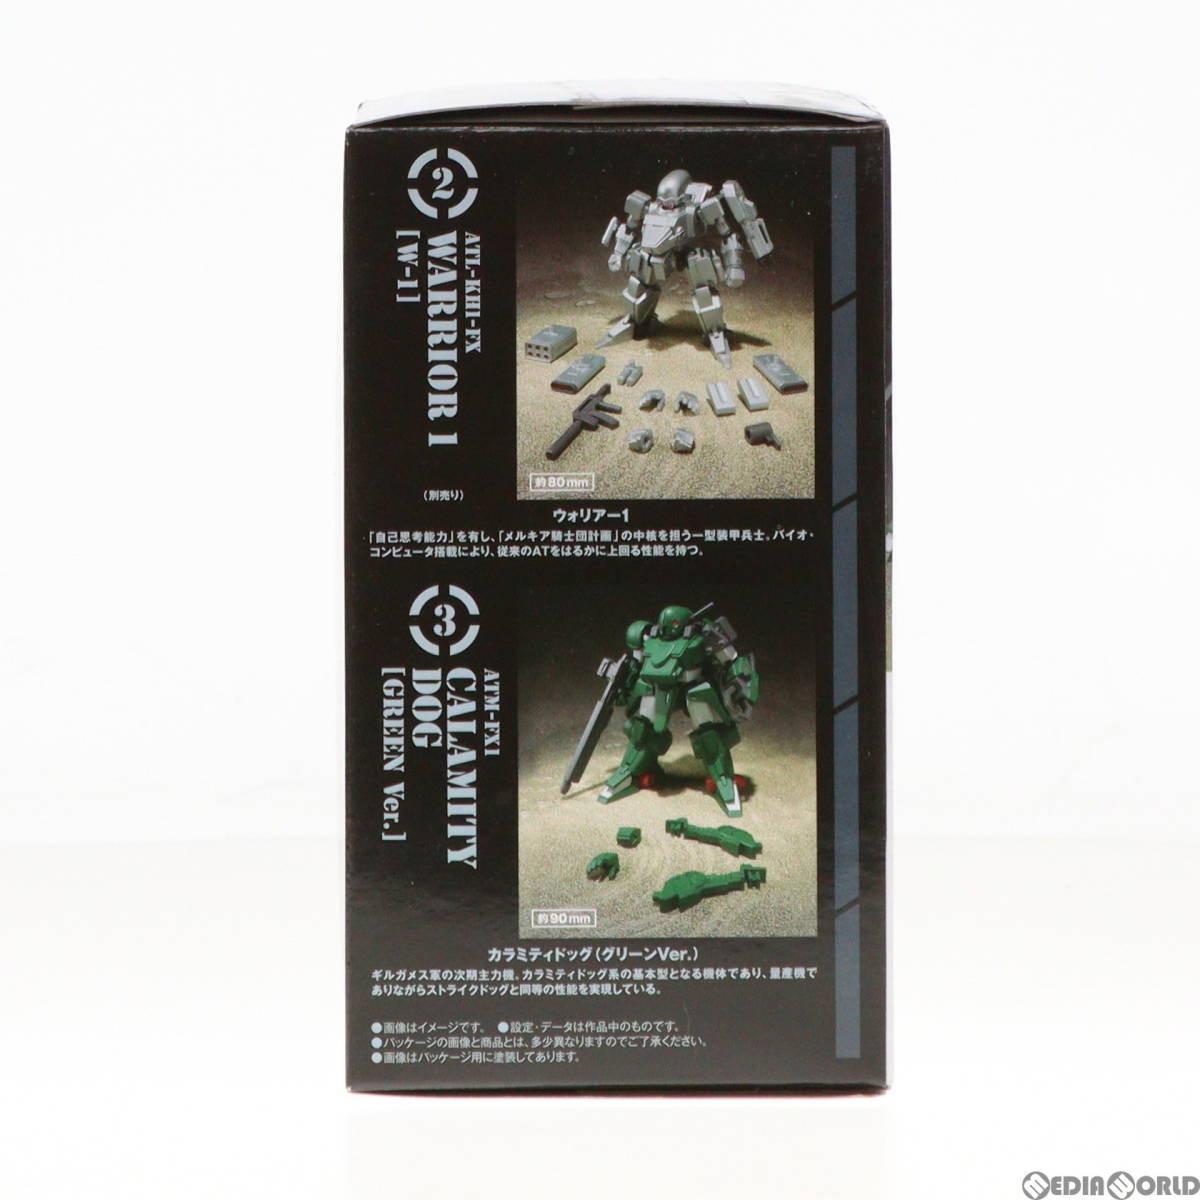 [ used ][PTM]( single goods )( Shokugan )1/48 super Mini pra blue. knight bell zeruga monogatari Vol.3kalamiti dog ( green Ver.) Armored Trooper Votoms pra 